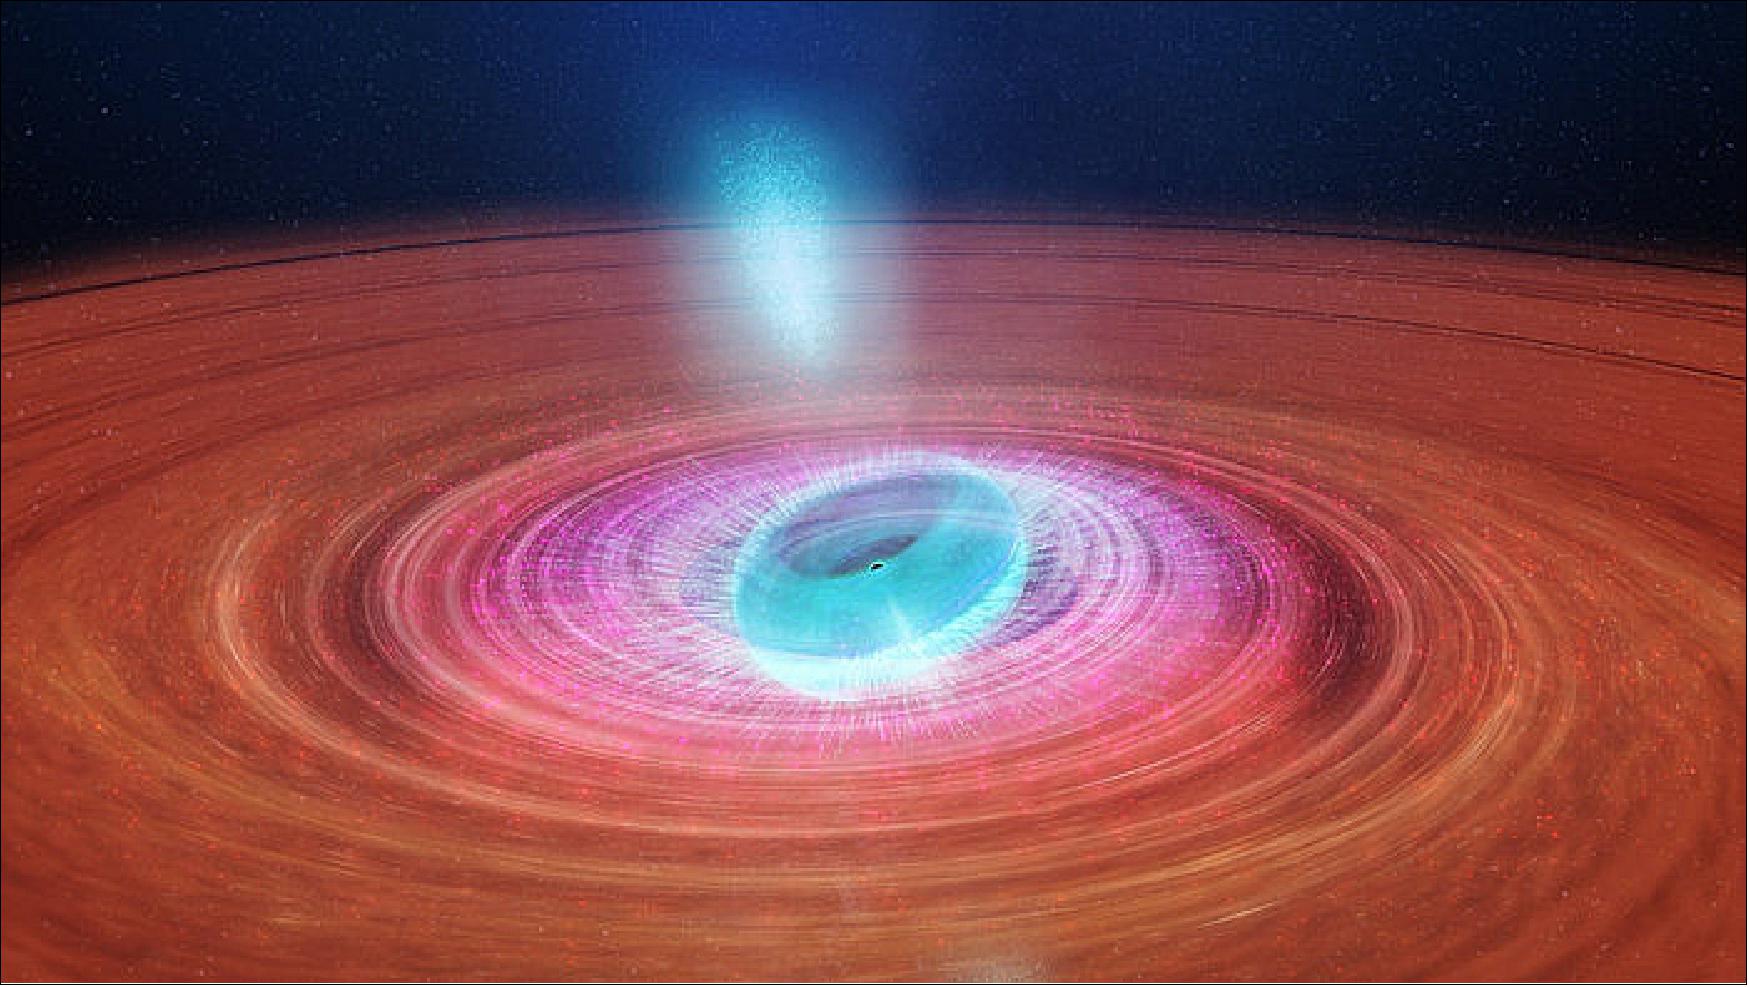 Figure 16: Artist's impression of a black hole accretion disc (image credit: ICRAR)